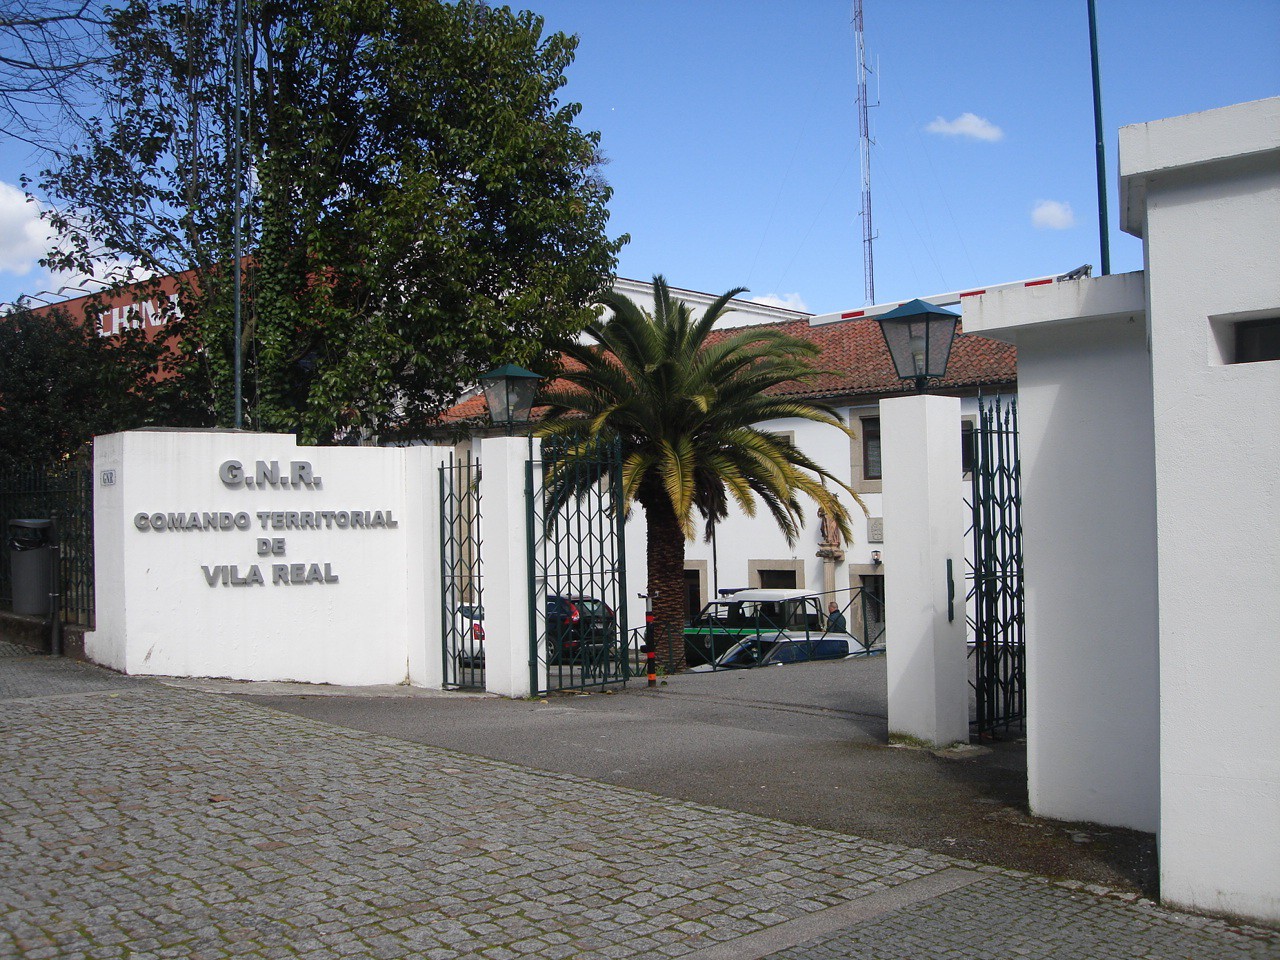 Detidos dois suspeitos de atear fogos no distrito de Vila Real